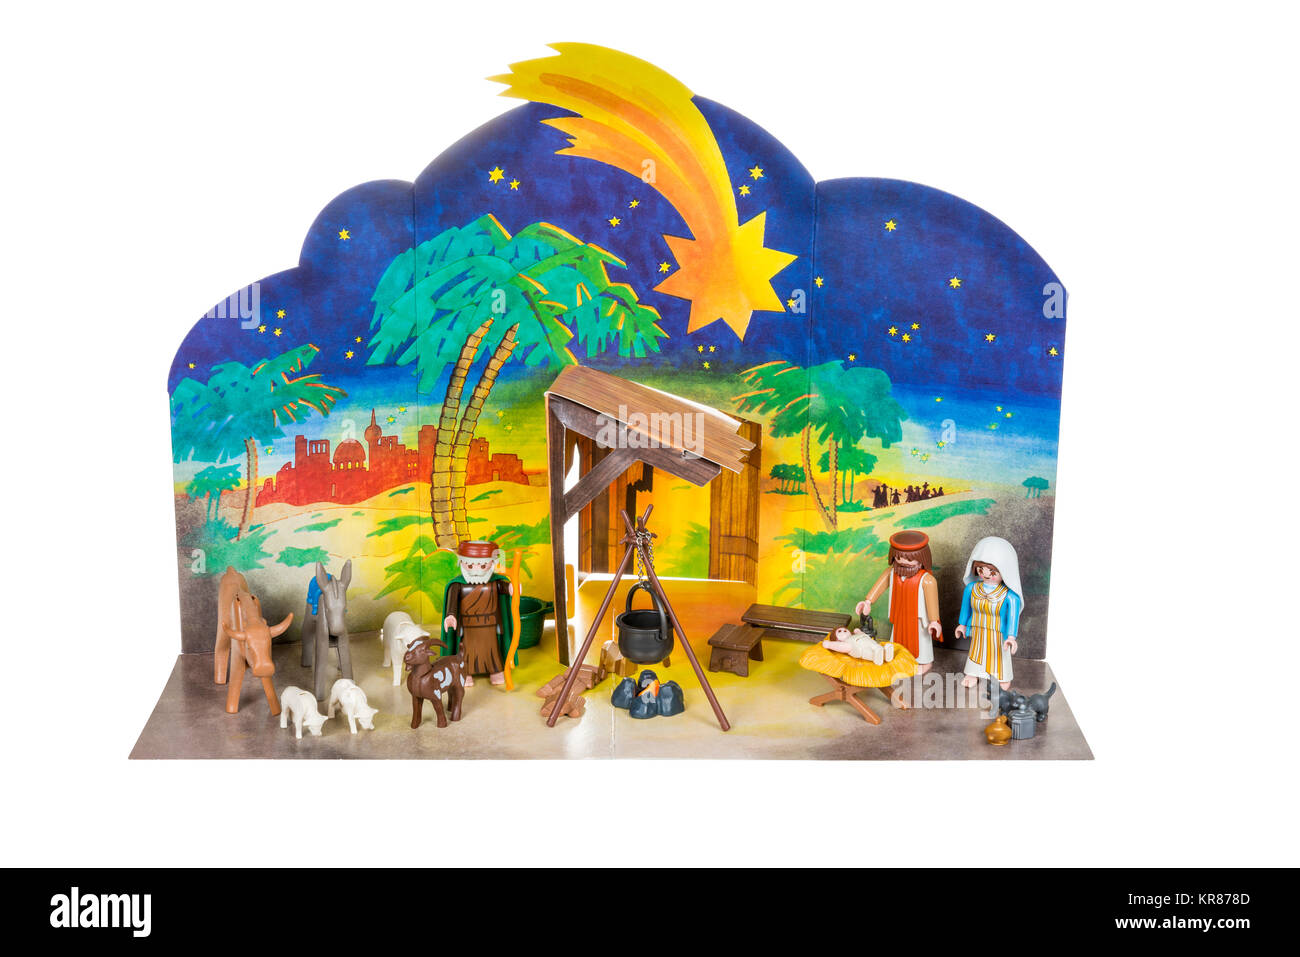 Playmobil Nativity Scene Stock Photo